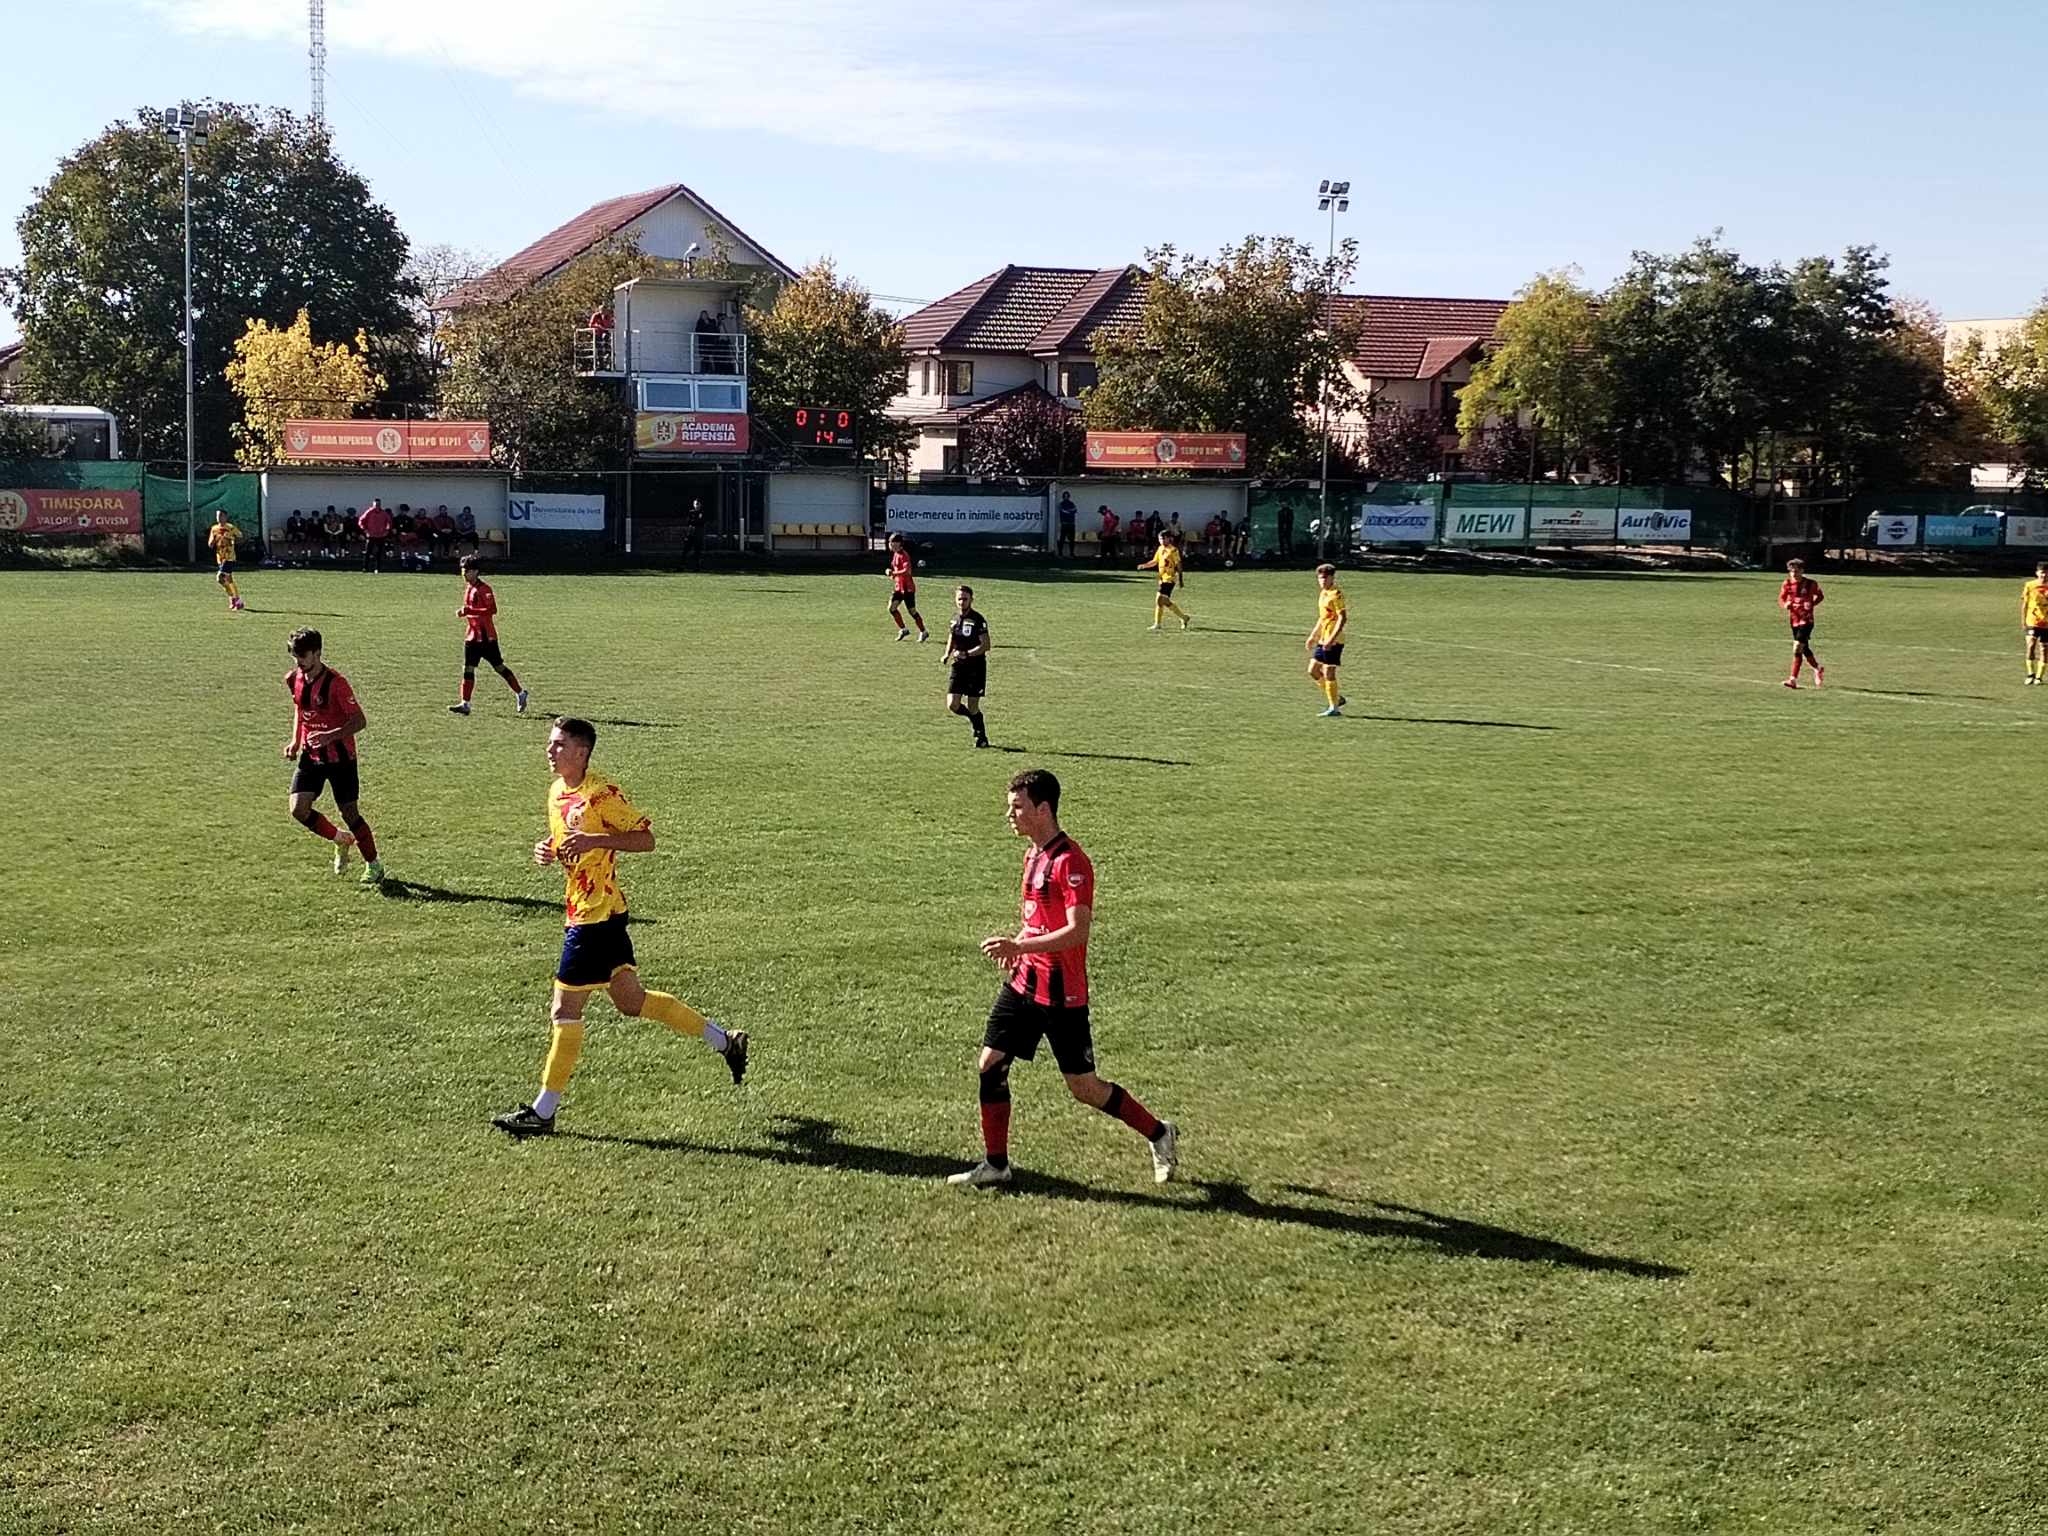 Ifiliga U18 | Temesvári sikerrel a play-offban